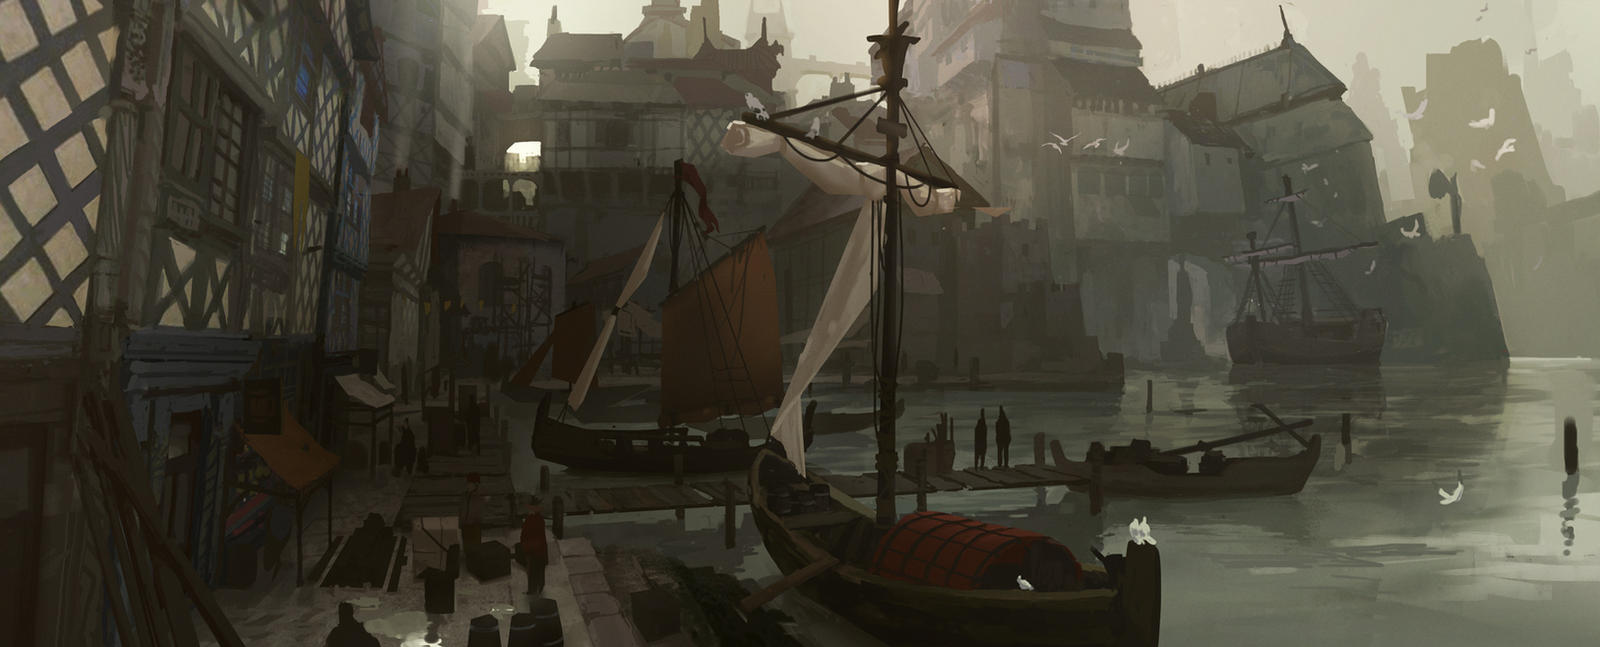 Medieval Port, by Kurobot